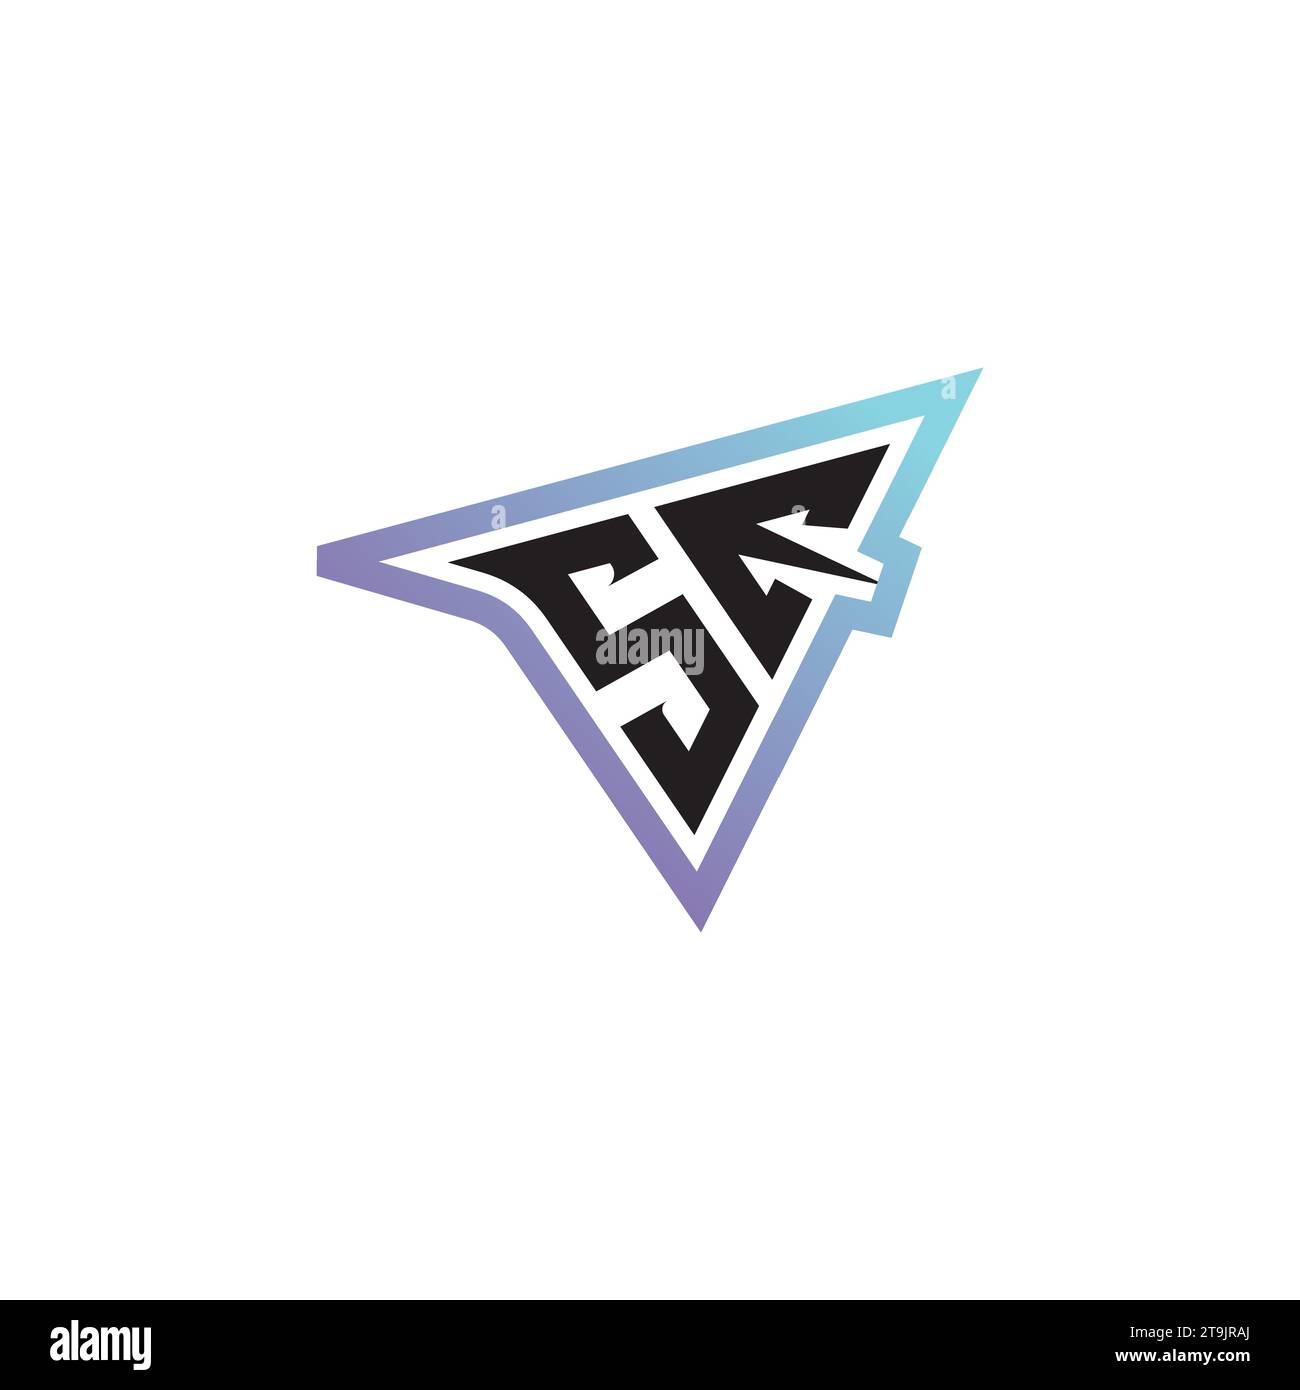 SE letter combination cool logo esport or gaming initial logo as a inspirational concept design Stock Vector